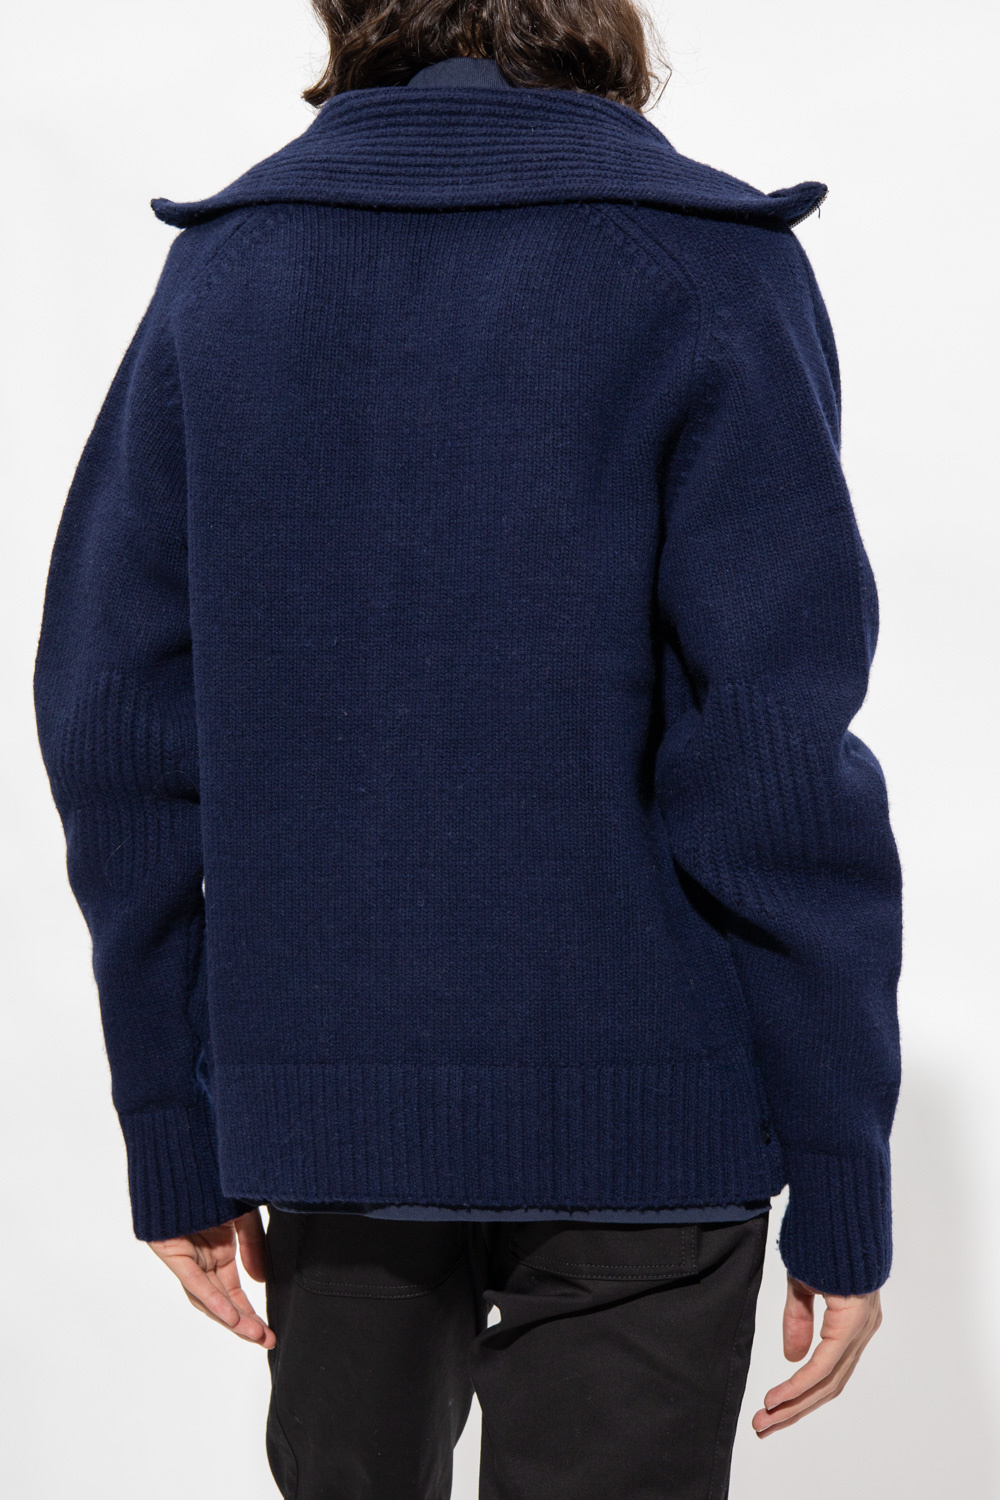 Jacquemus ‘Meunier’ sweater with high neck